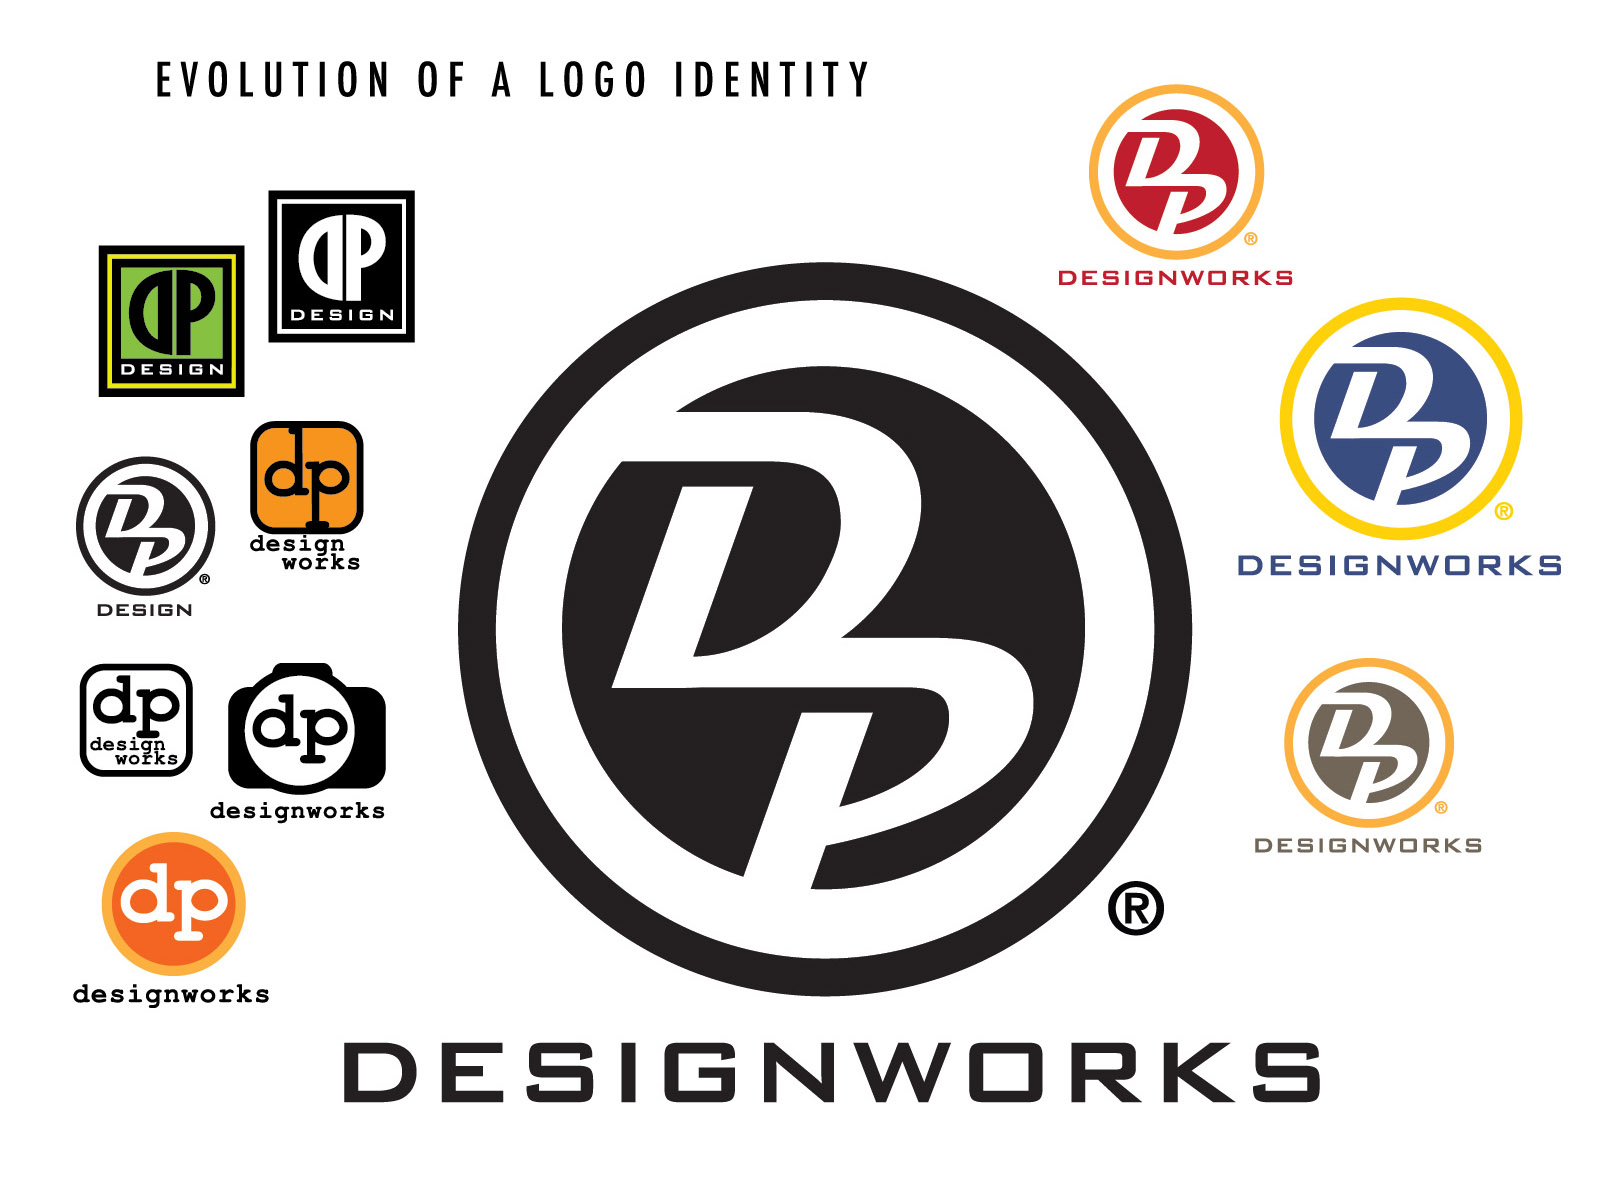 DPdesignWorks Logos